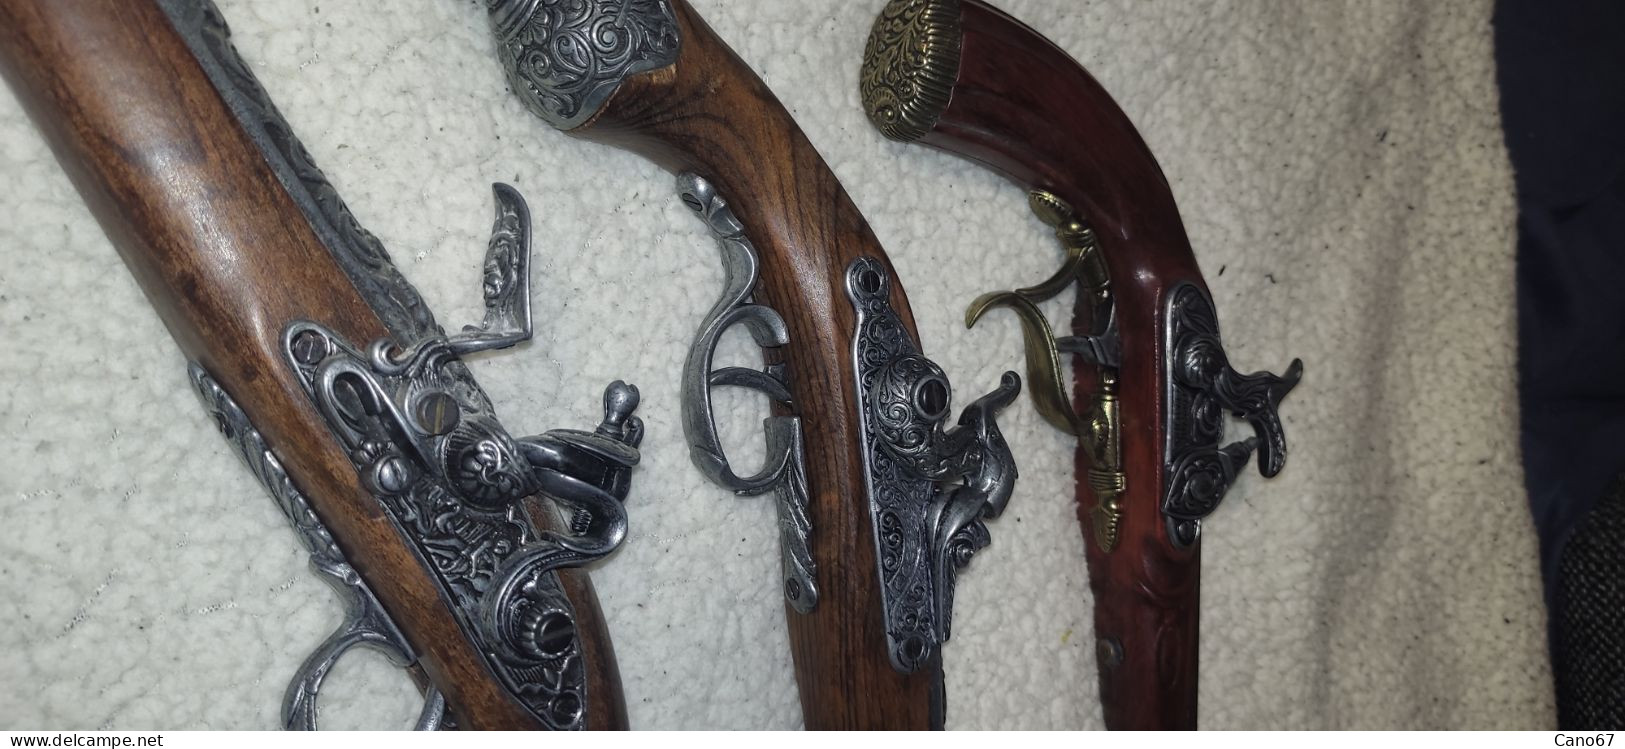 Replicas Armas Antiguas - Decorative Weapons